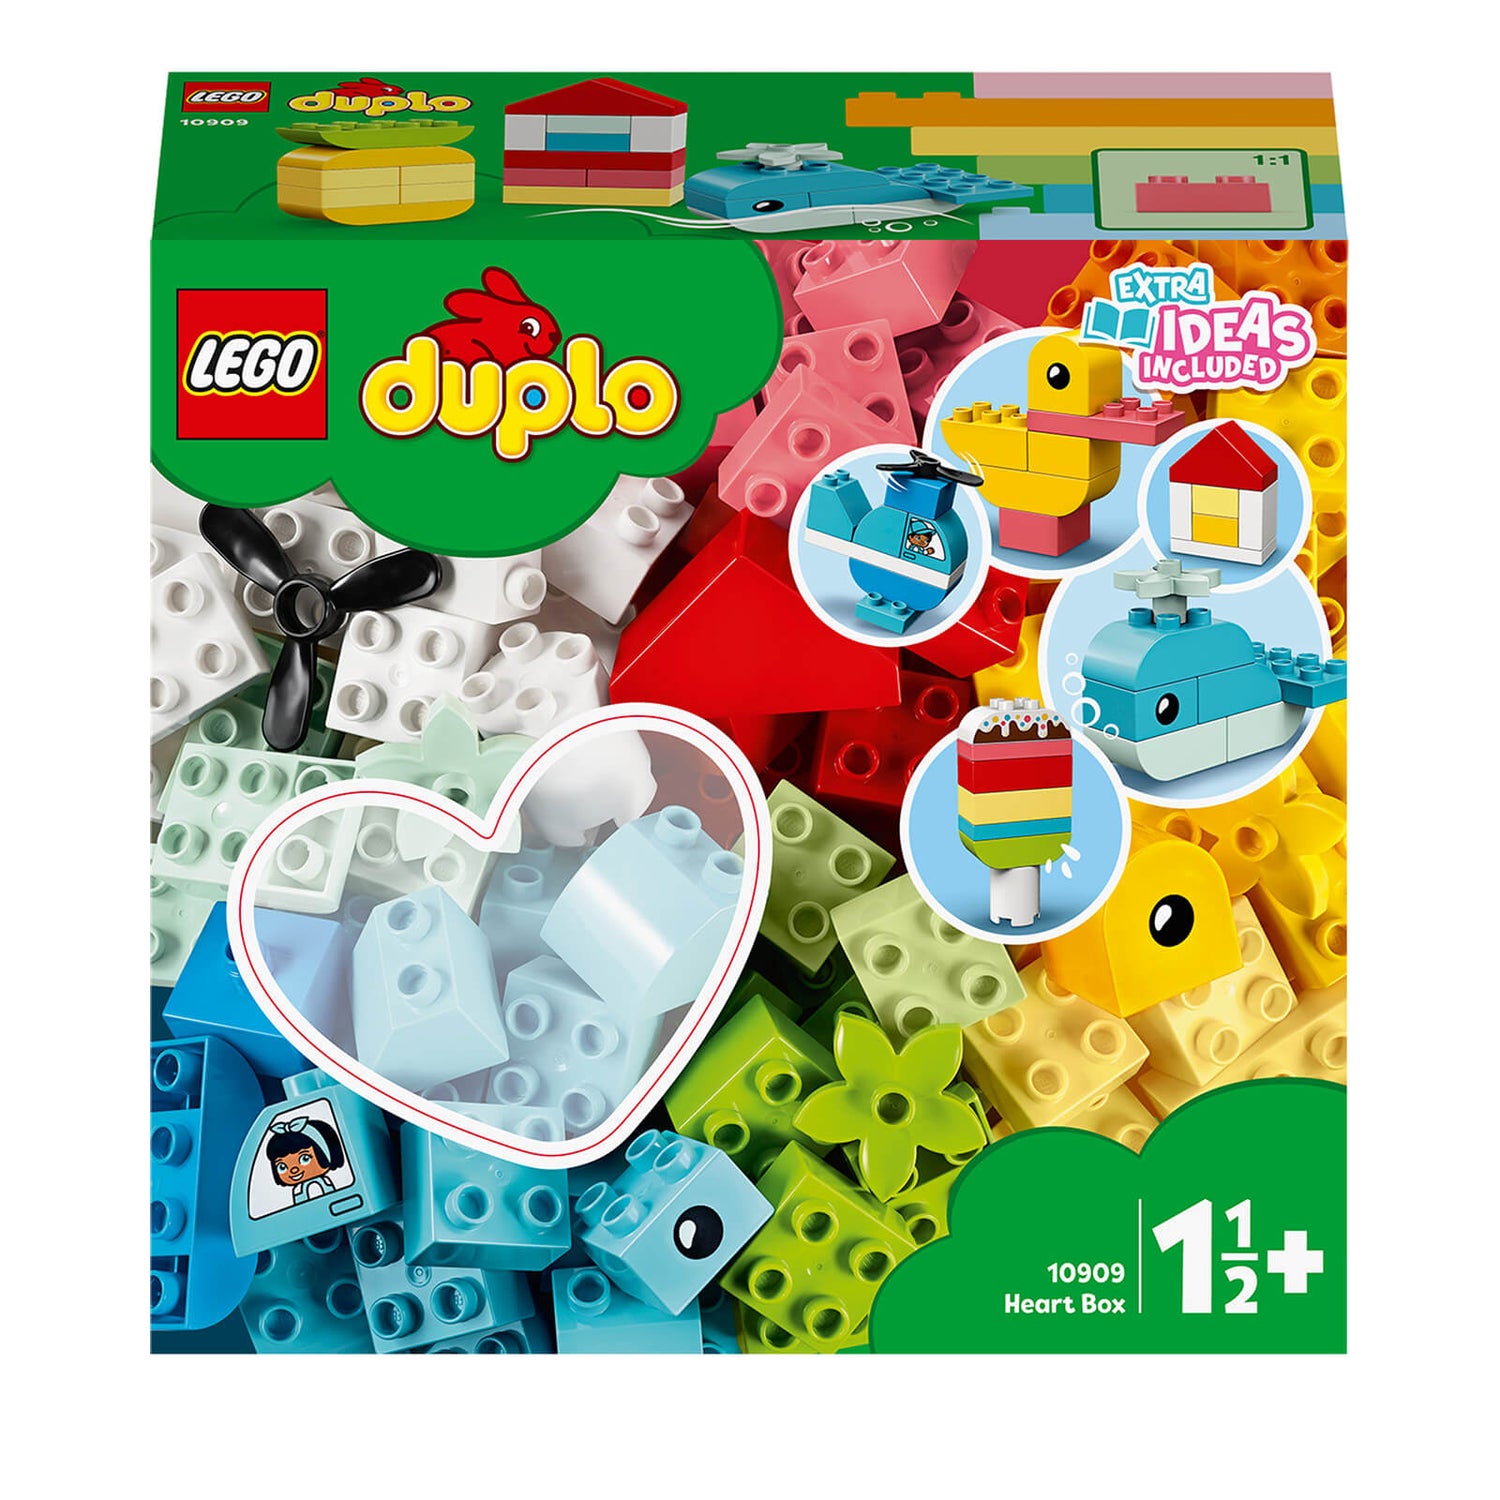 LEGO Duplo Heart Box Building Toy (10909)